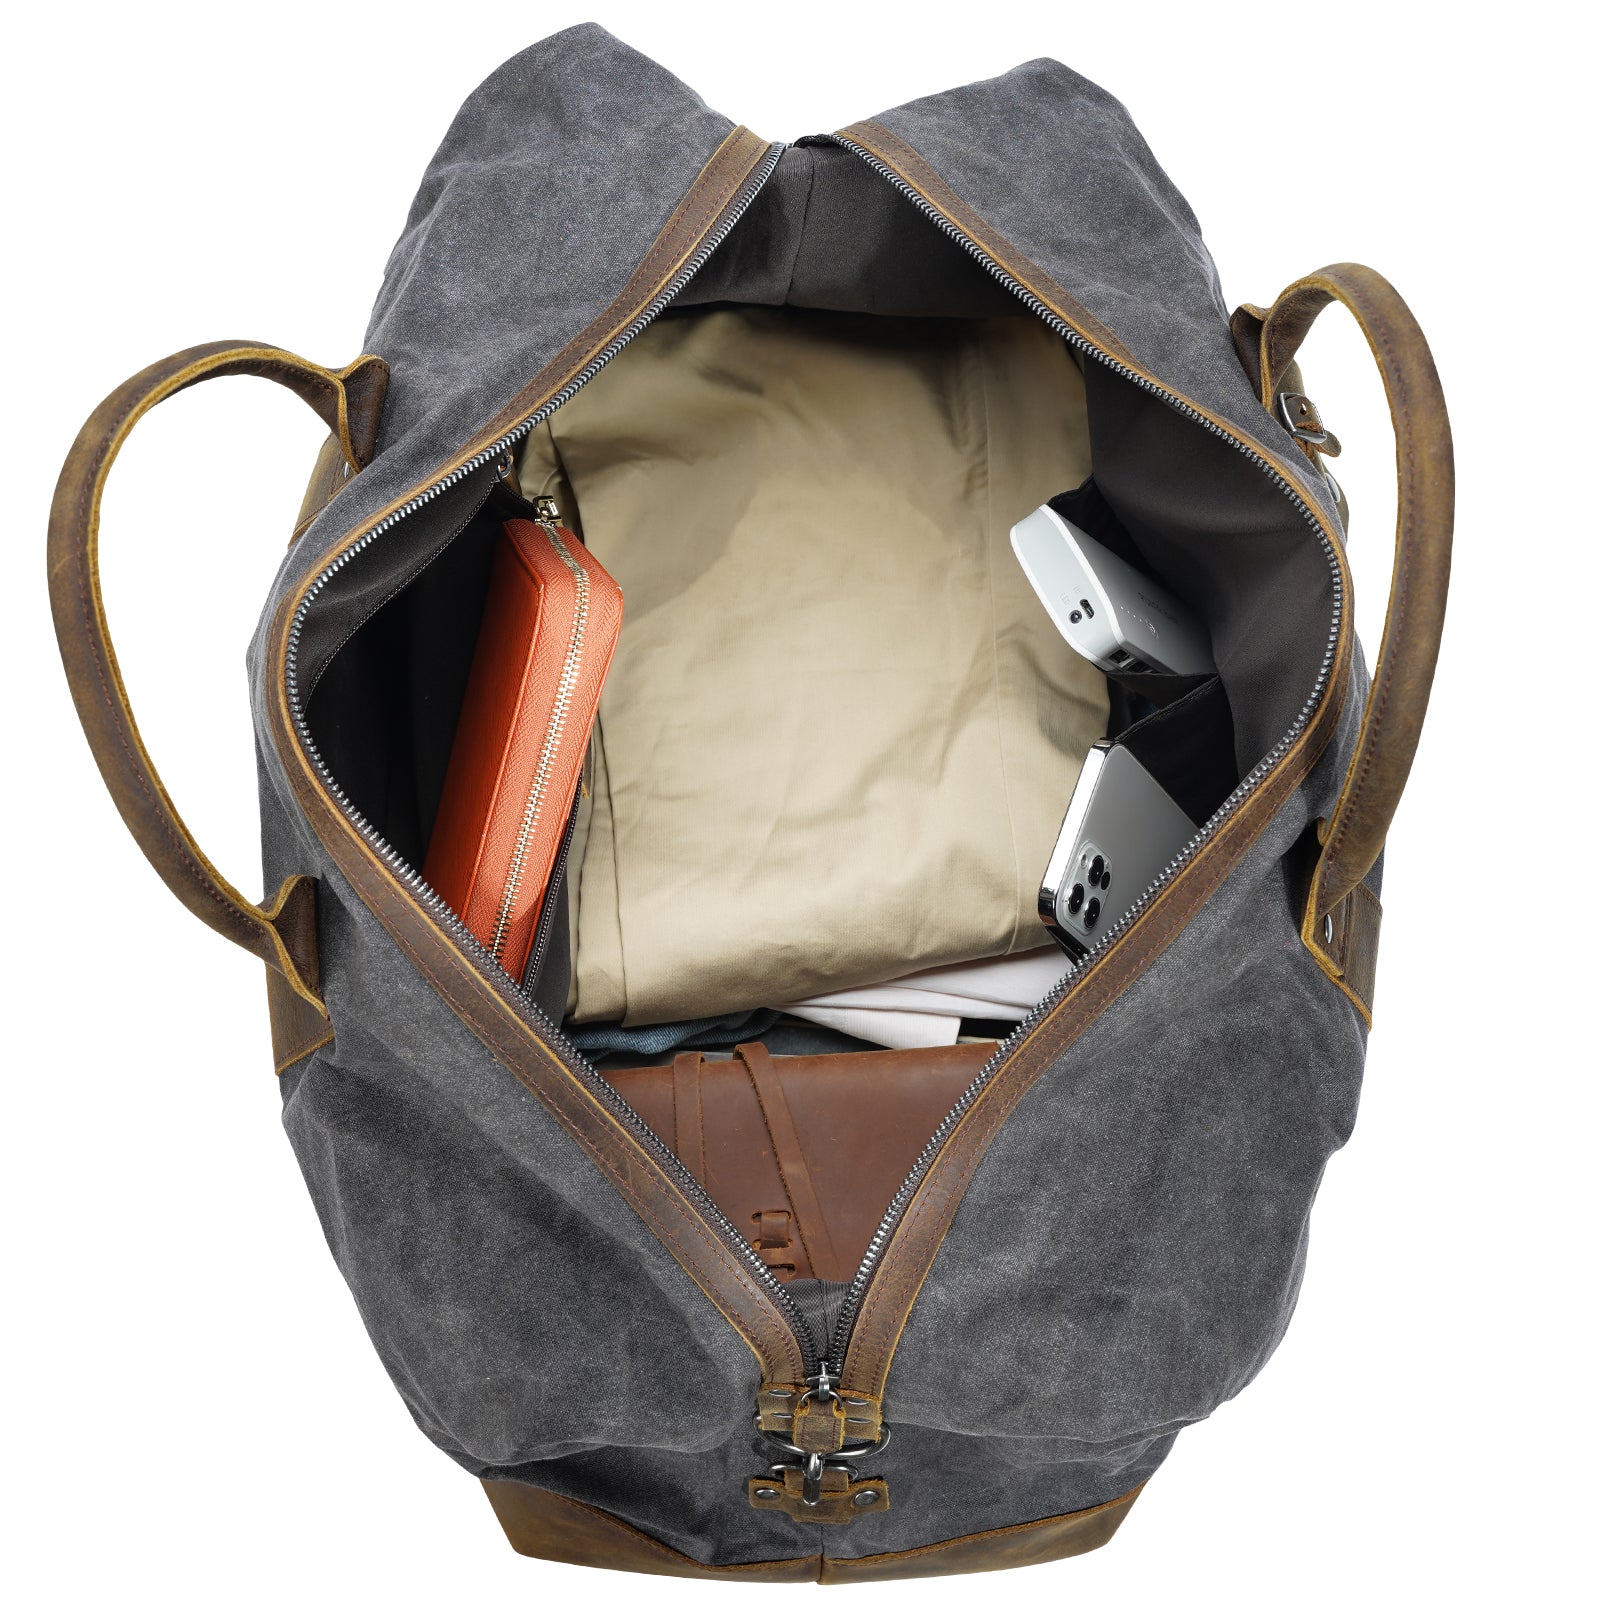 Polare 23” Cowhide Leather Waterproof Waxed Canvas Travel Duffel Bag (Grey,Inside)